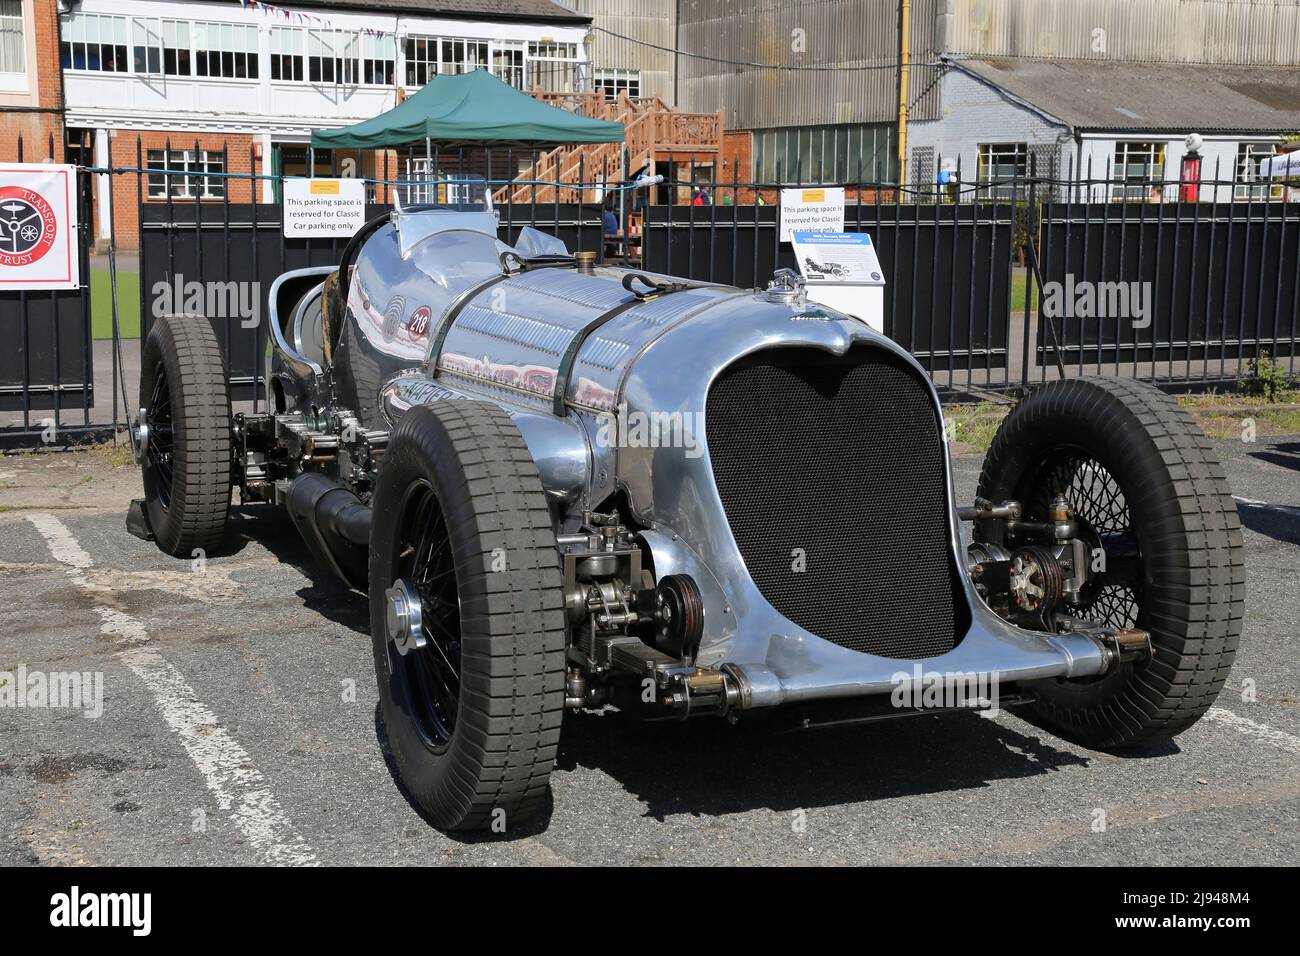 Napier-Railton 535hp W12 (1934, Brooklands Lap Record car), Centenary of Speed, 17 May 2022, Brooklands Museum, Weybridge, Surrey, England, UK, Europe Stock Photo